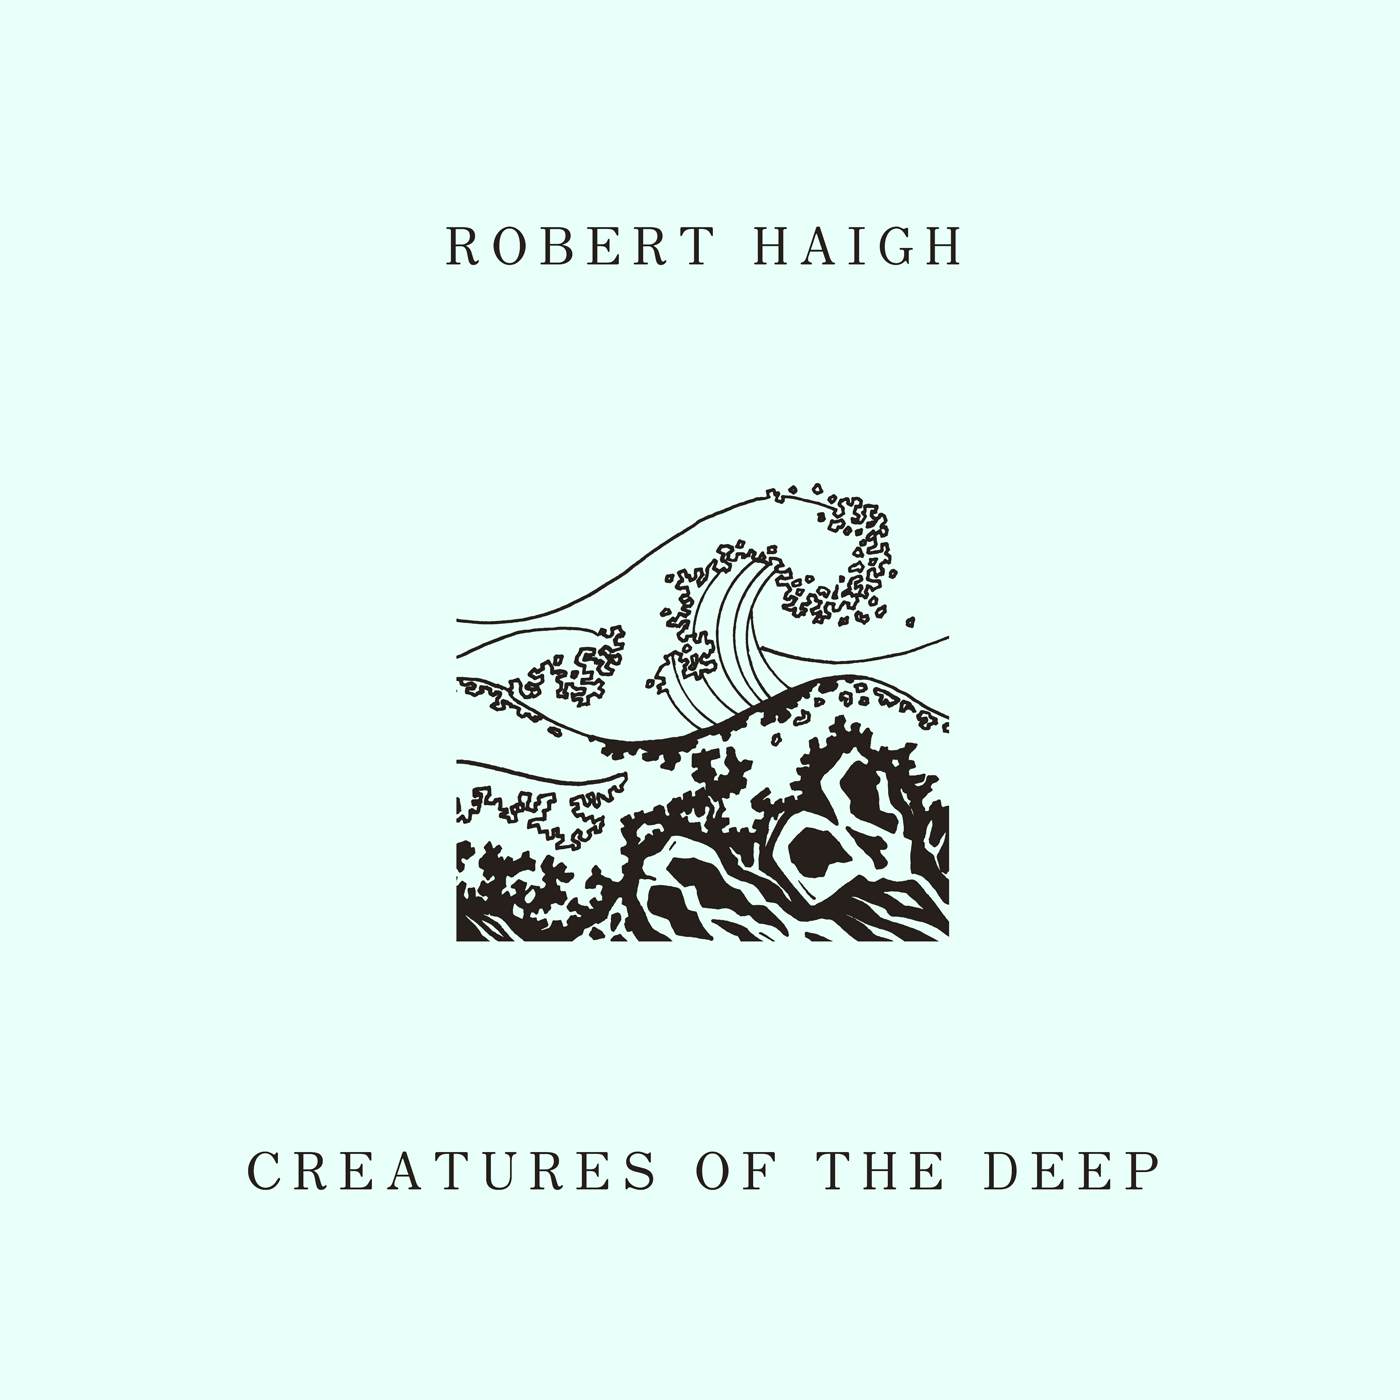 Robert Haigh Creatures of the Deep Vinyl Record